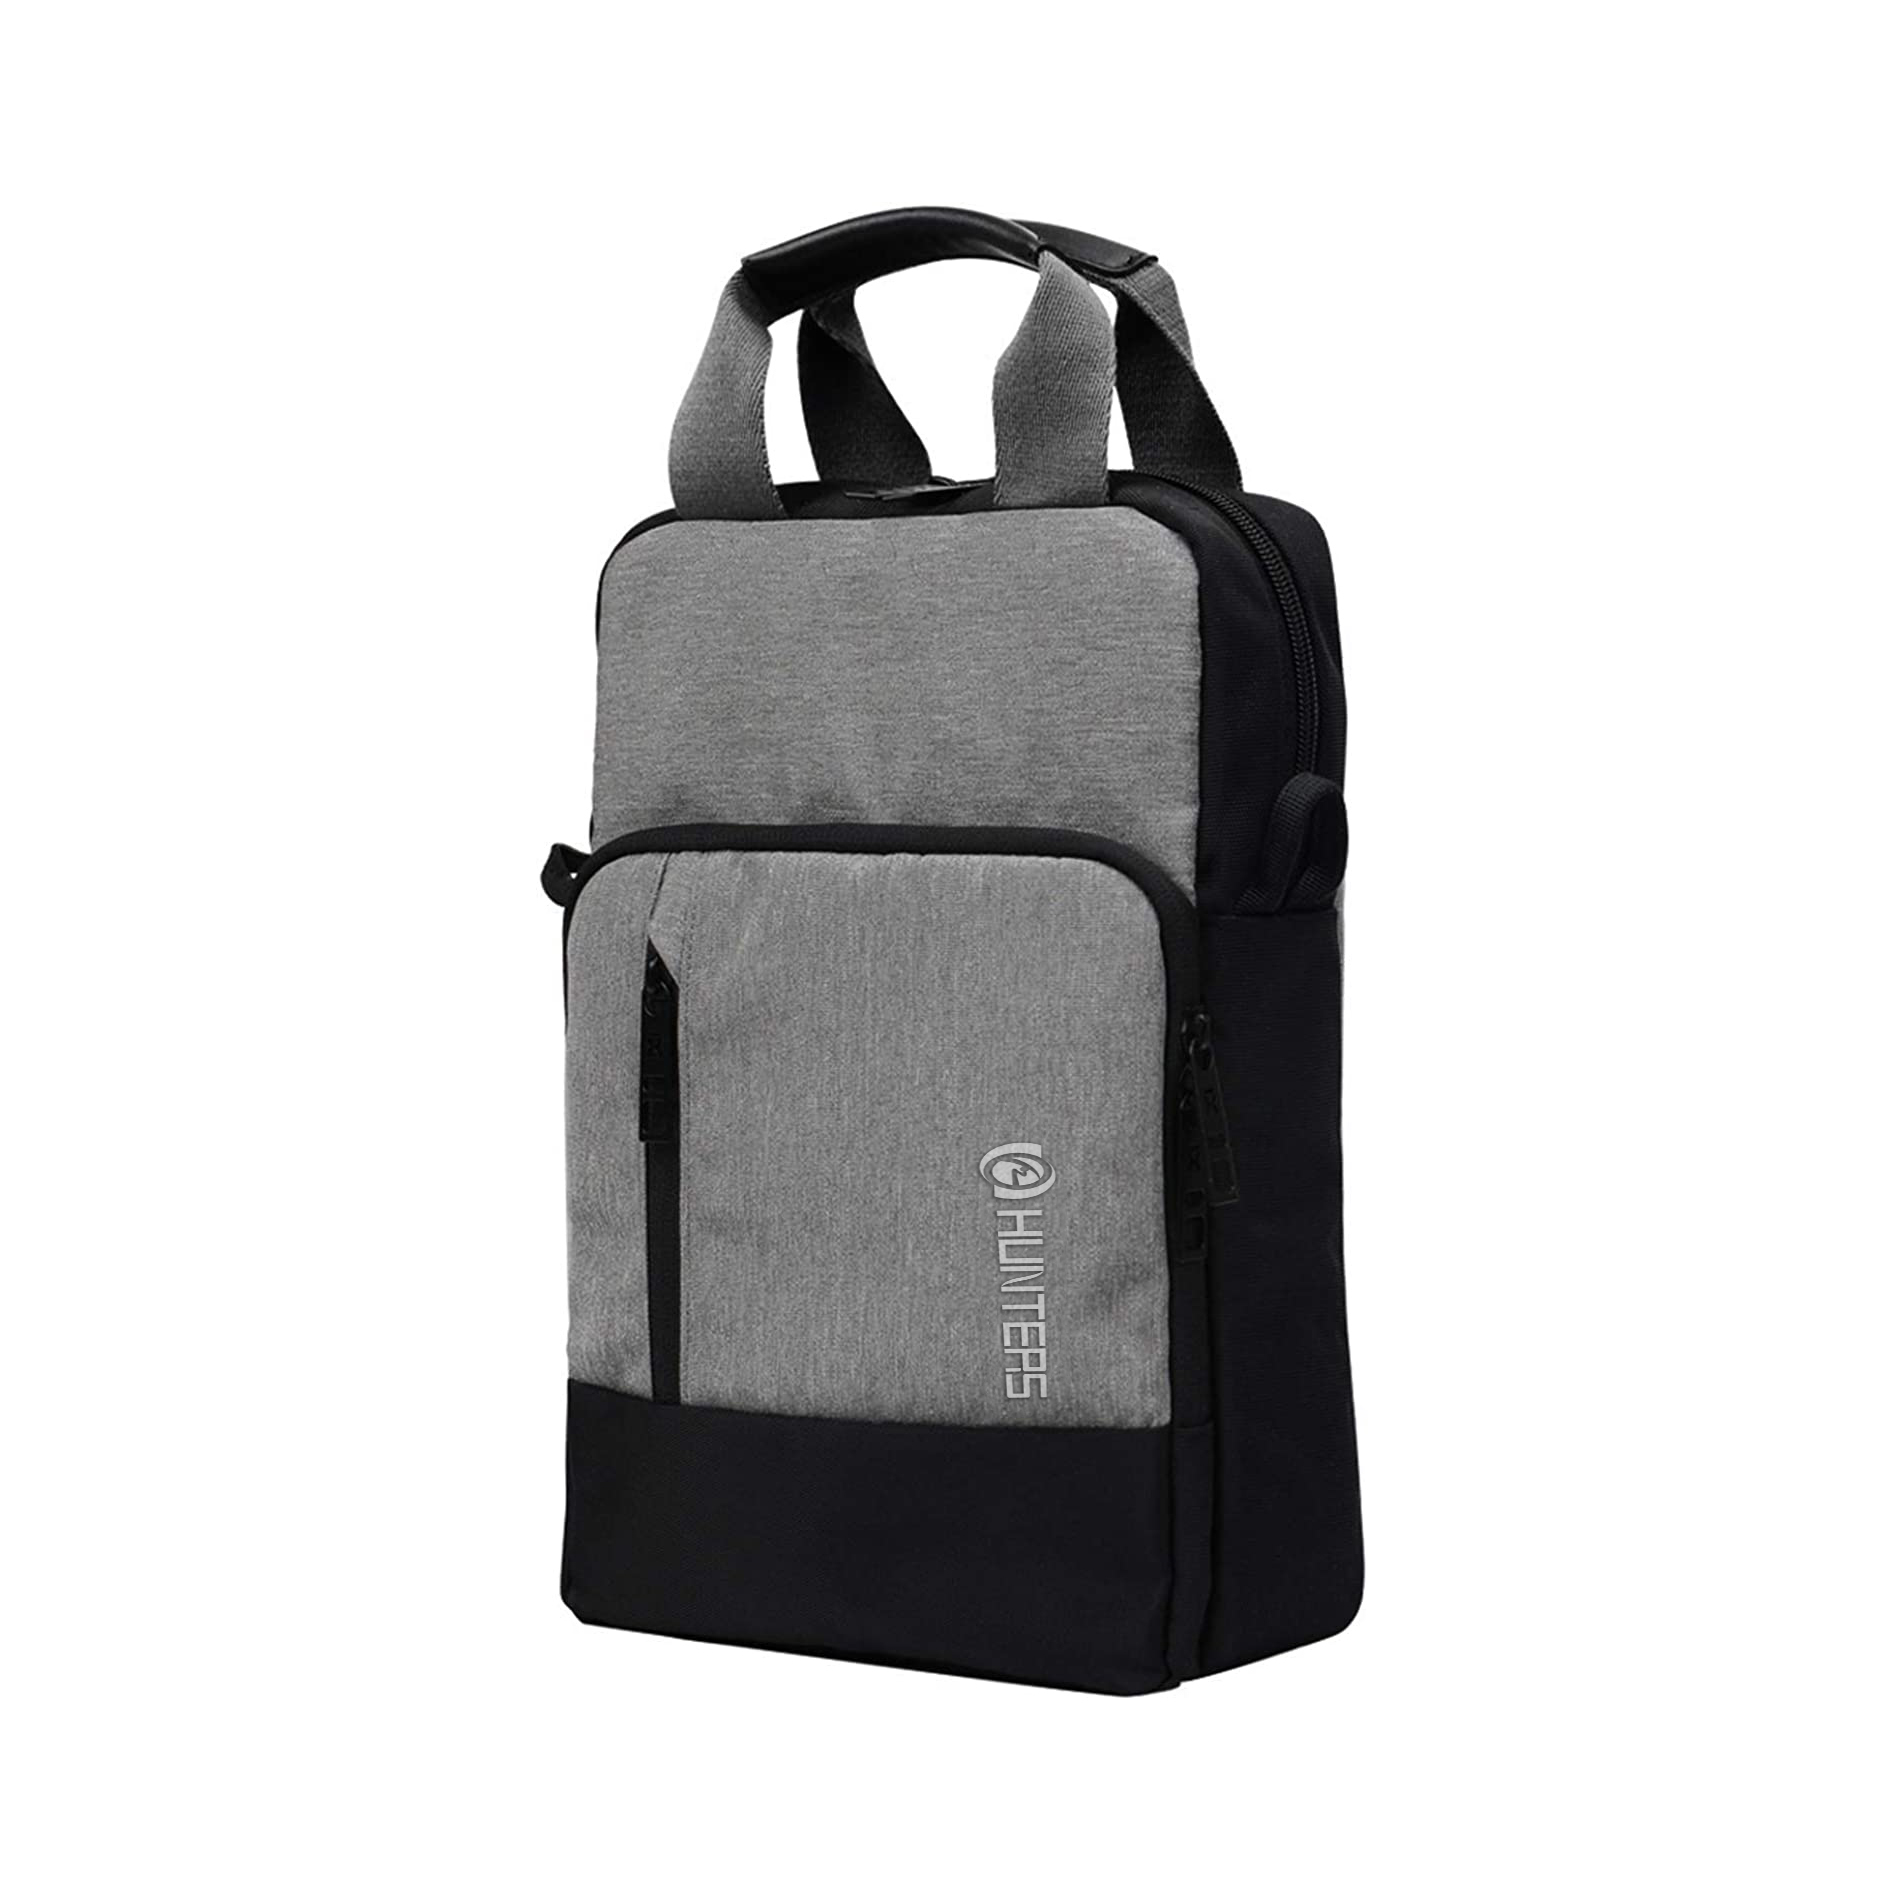 Bolso de hombro para mujer, bolso pequeño para tableta, bolso de estilo satchel resistente, bolso de mensajero para exteriores, bolso bandolera para hombre